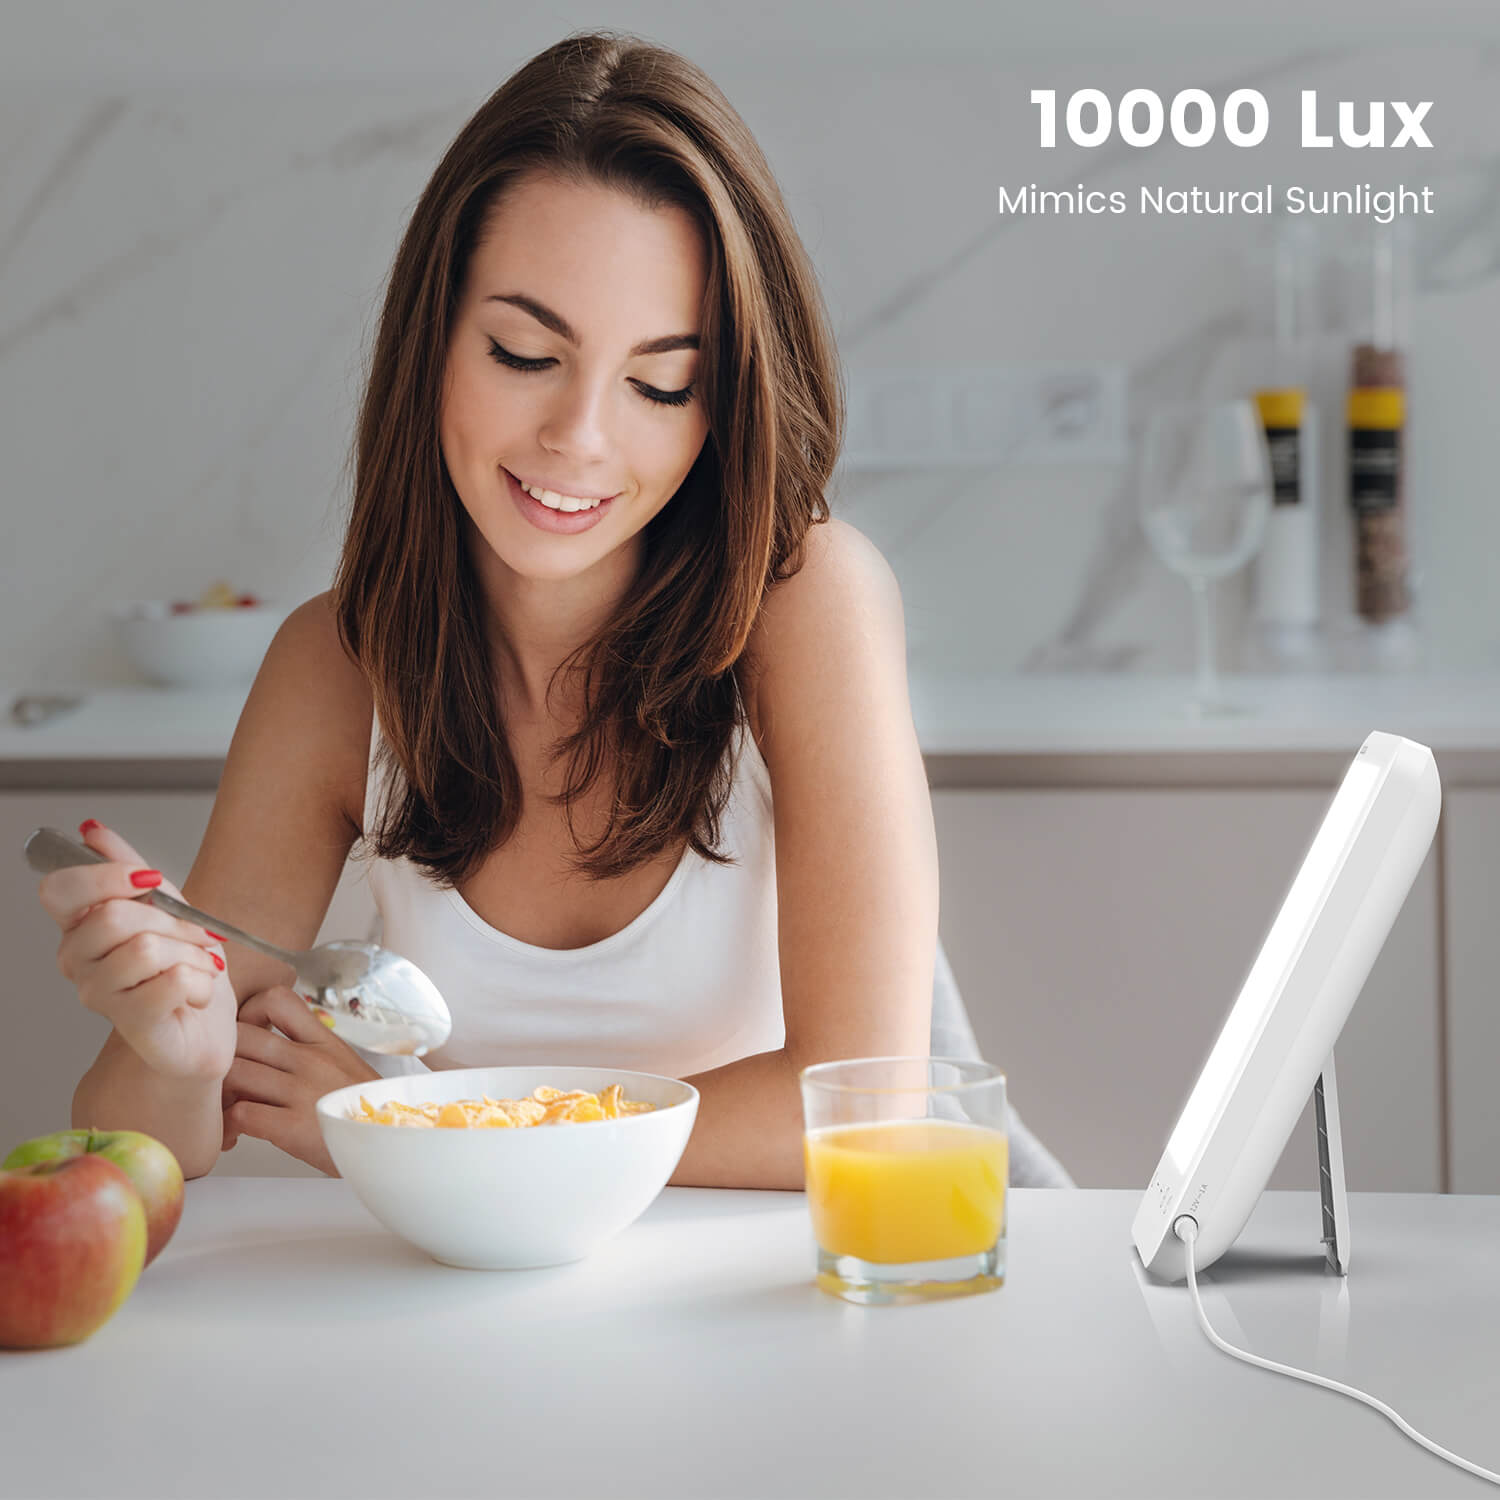 10000 Lux Sunlight lamp